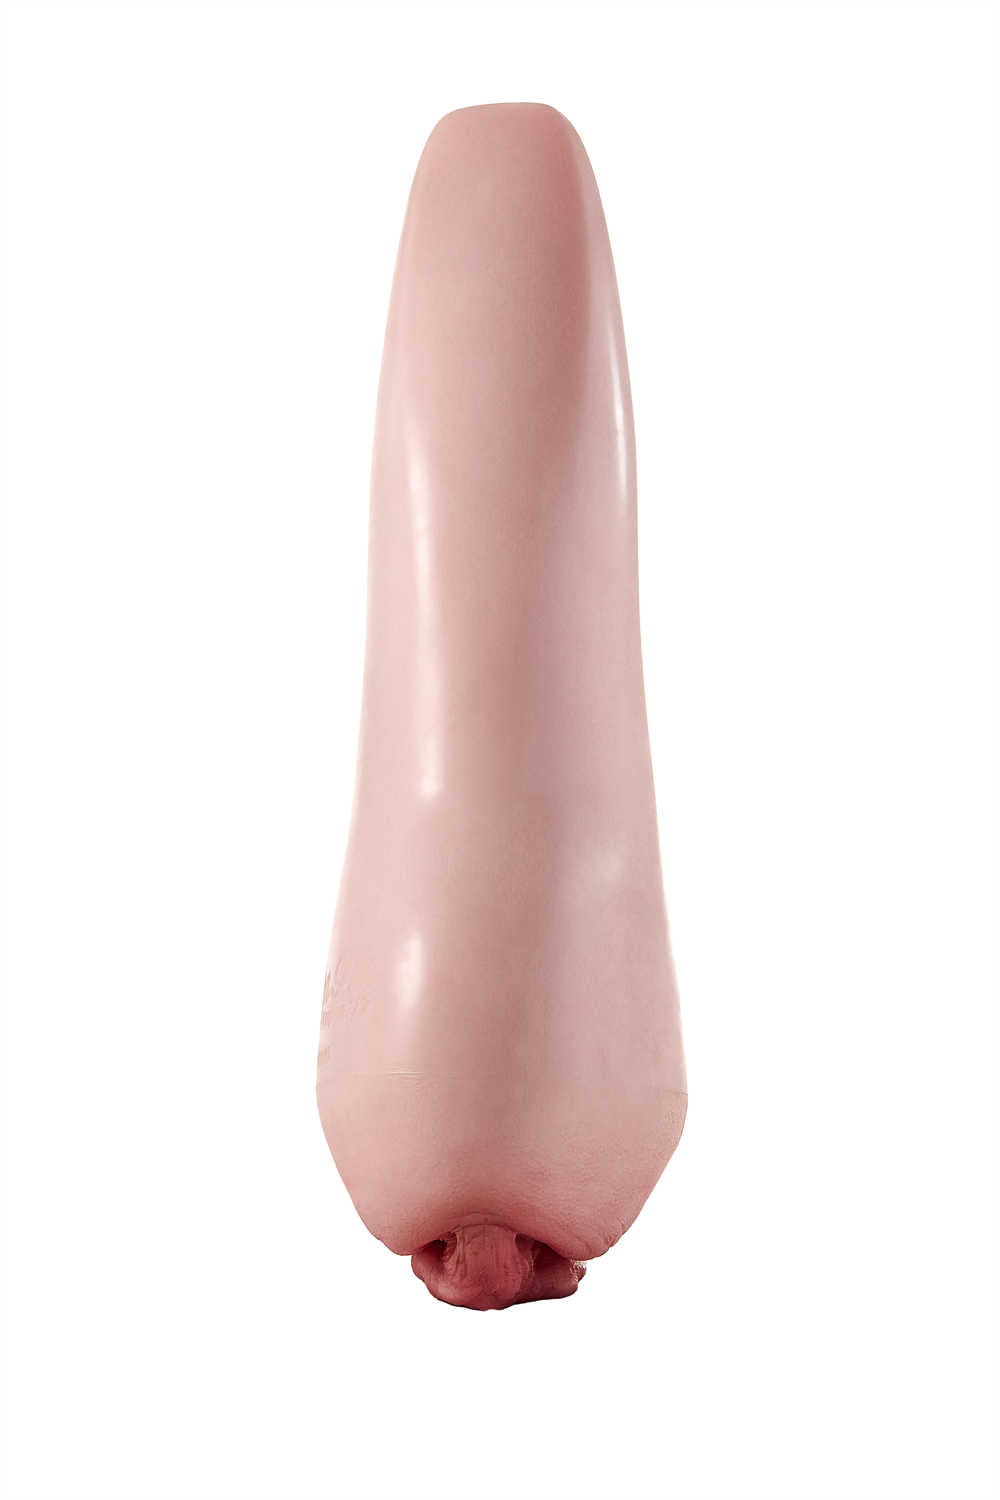 CLIMAX DOLL - Silicone Masturbation Cup Vagina 122